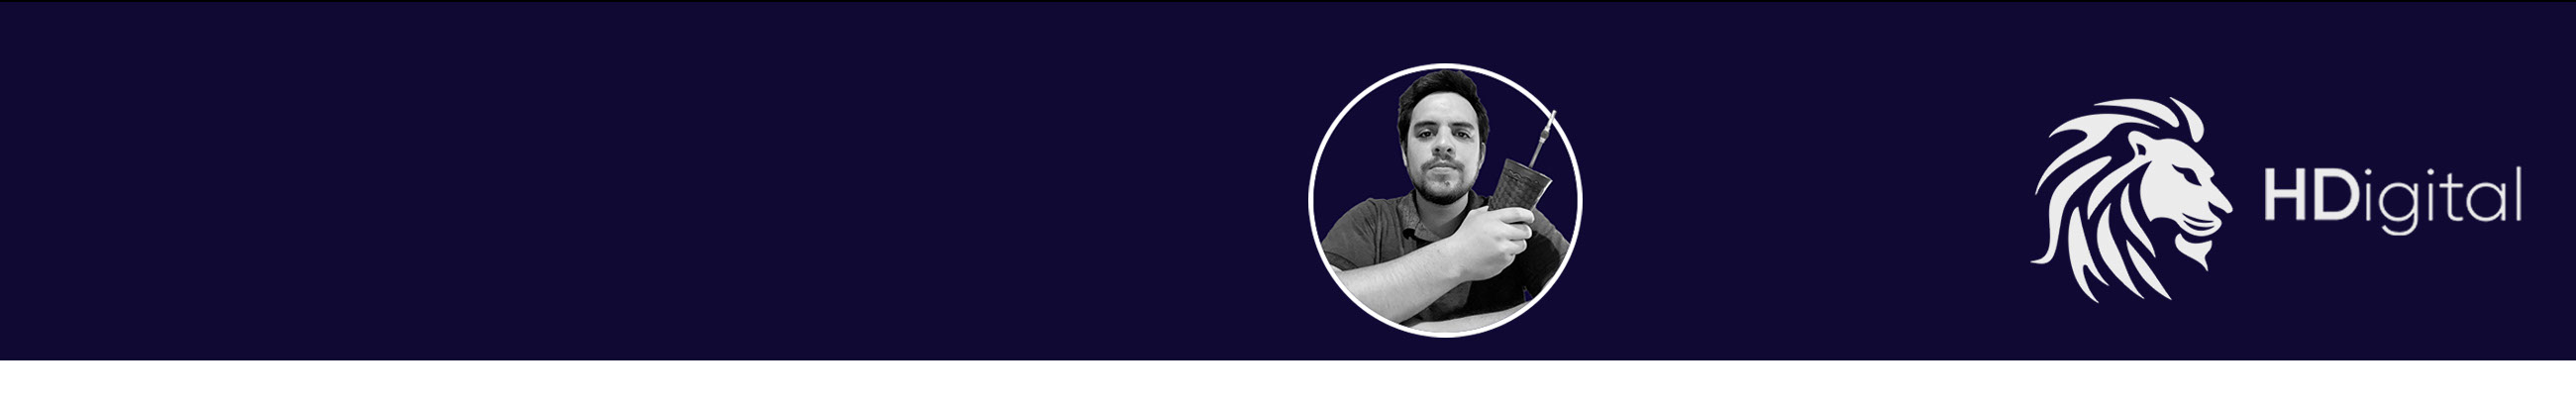 Hugo Duarte's profile banner